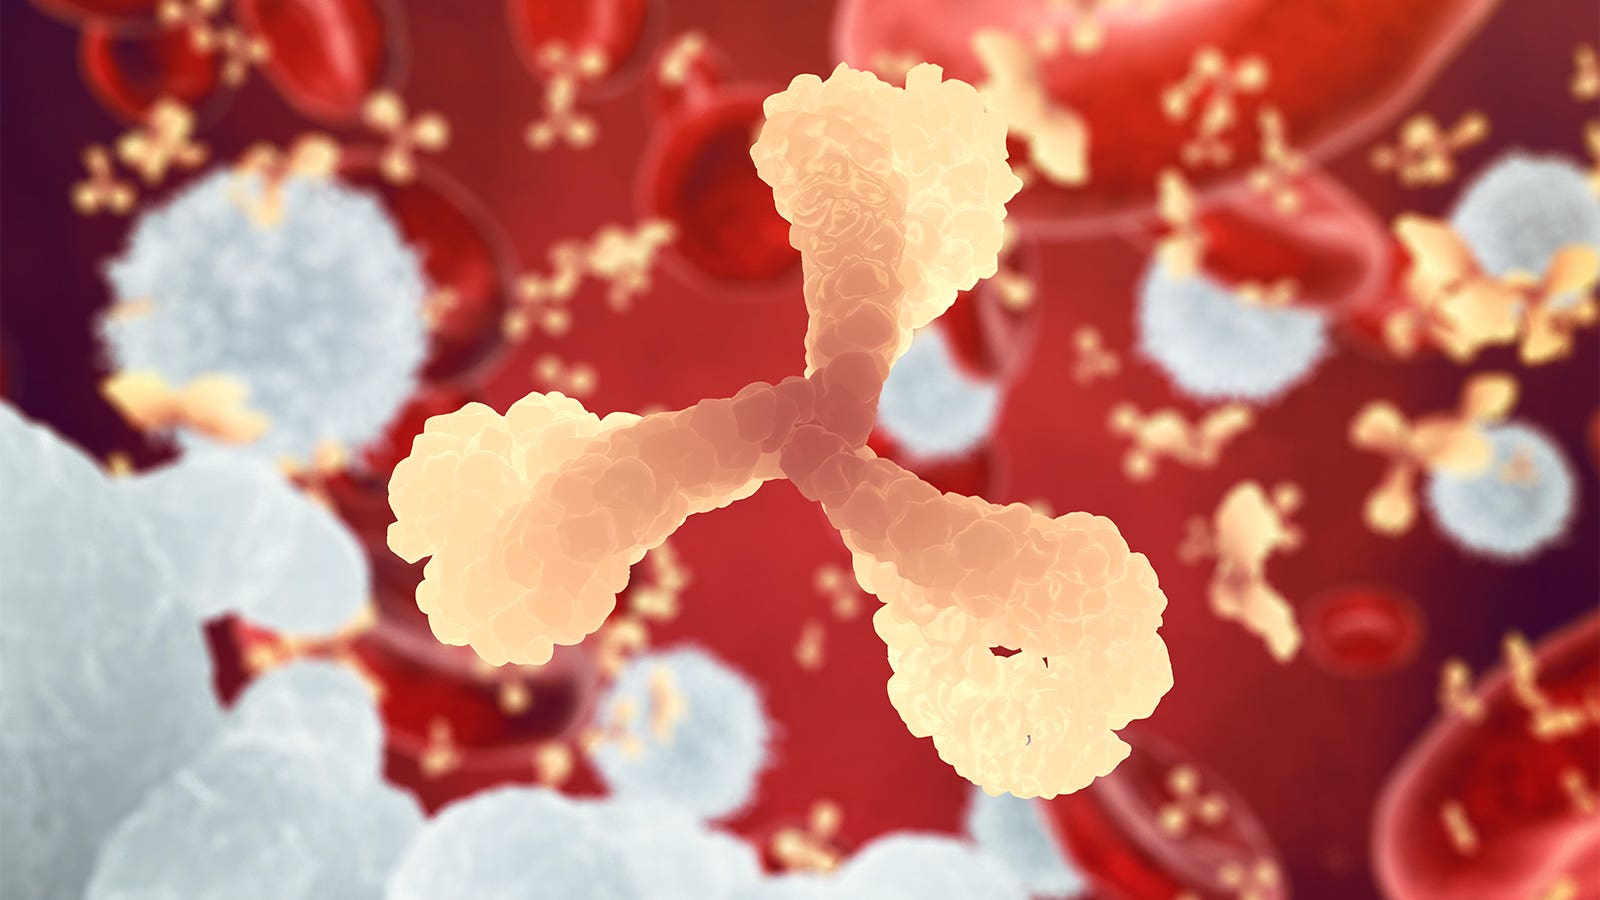 Can an Autoimmunity Lead to Immune Deficiency?